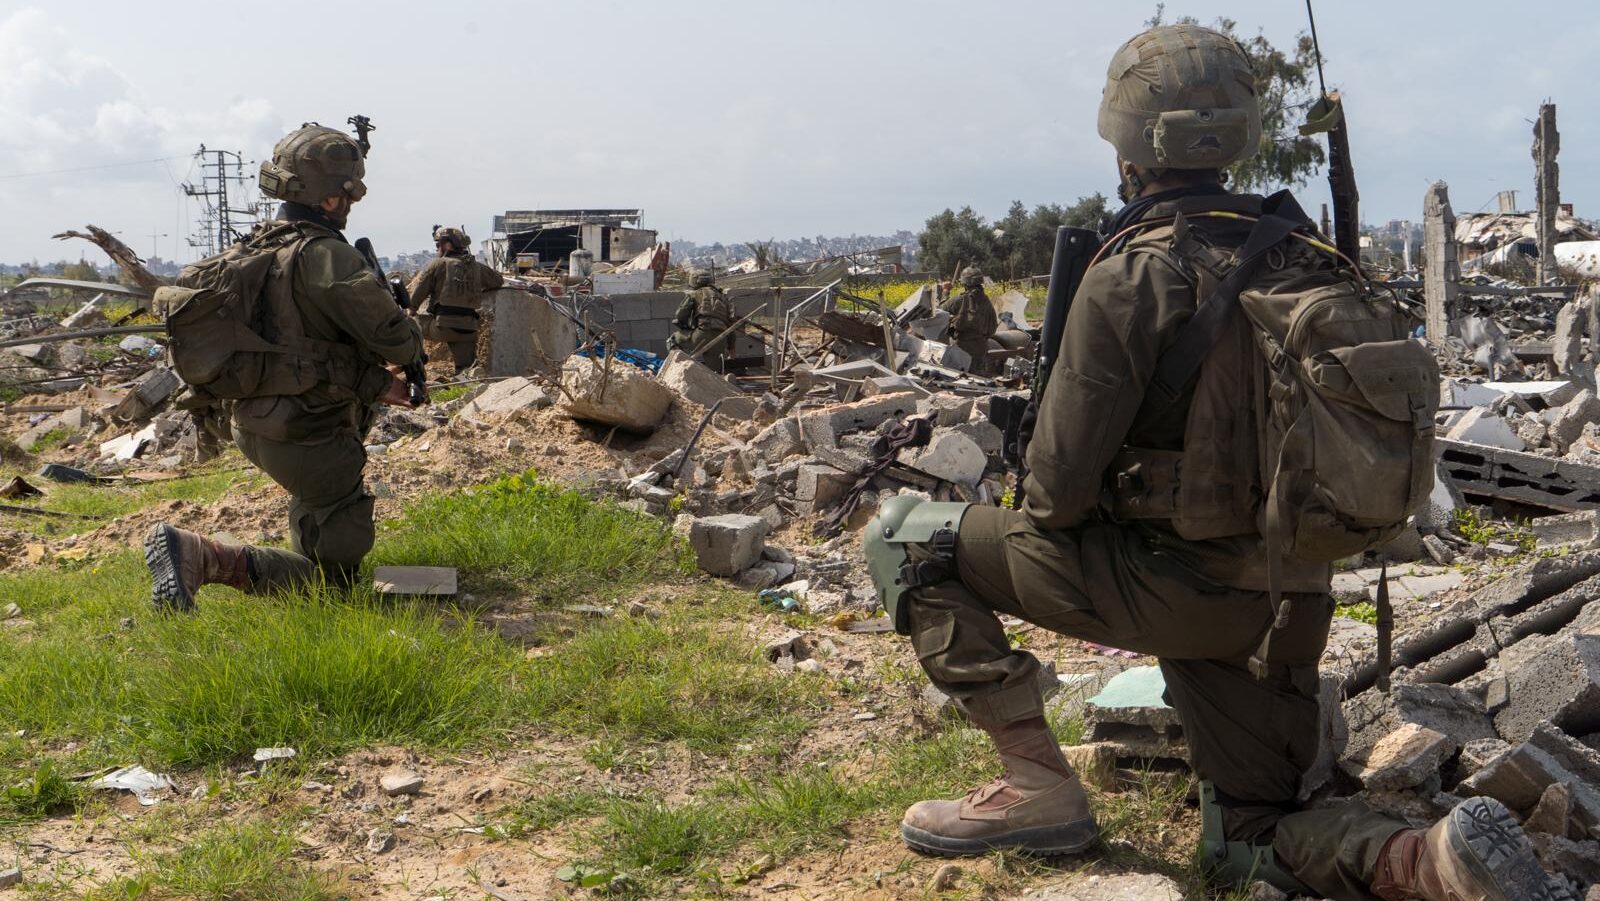 Netanyahu Defies Global Pleas, Continues Gaza Military Campaign